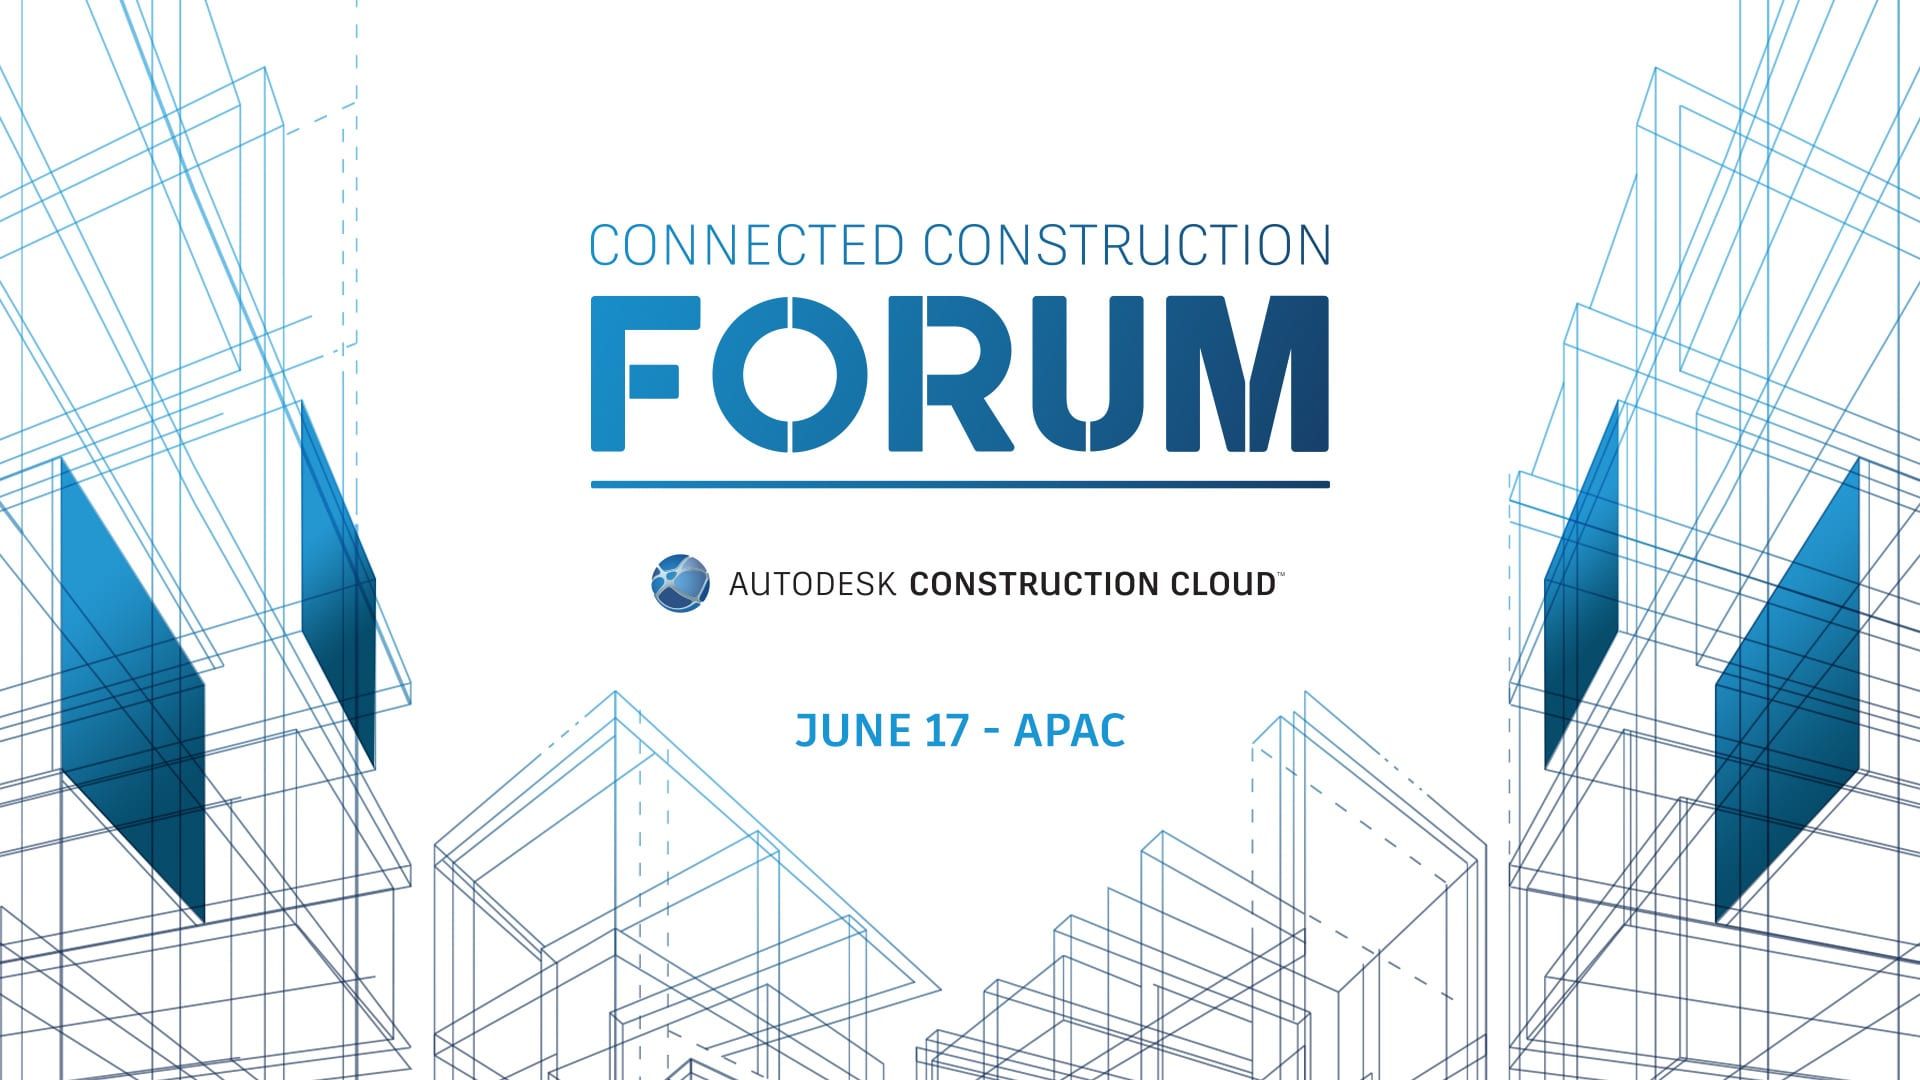 autodesk connected construction forum APAC